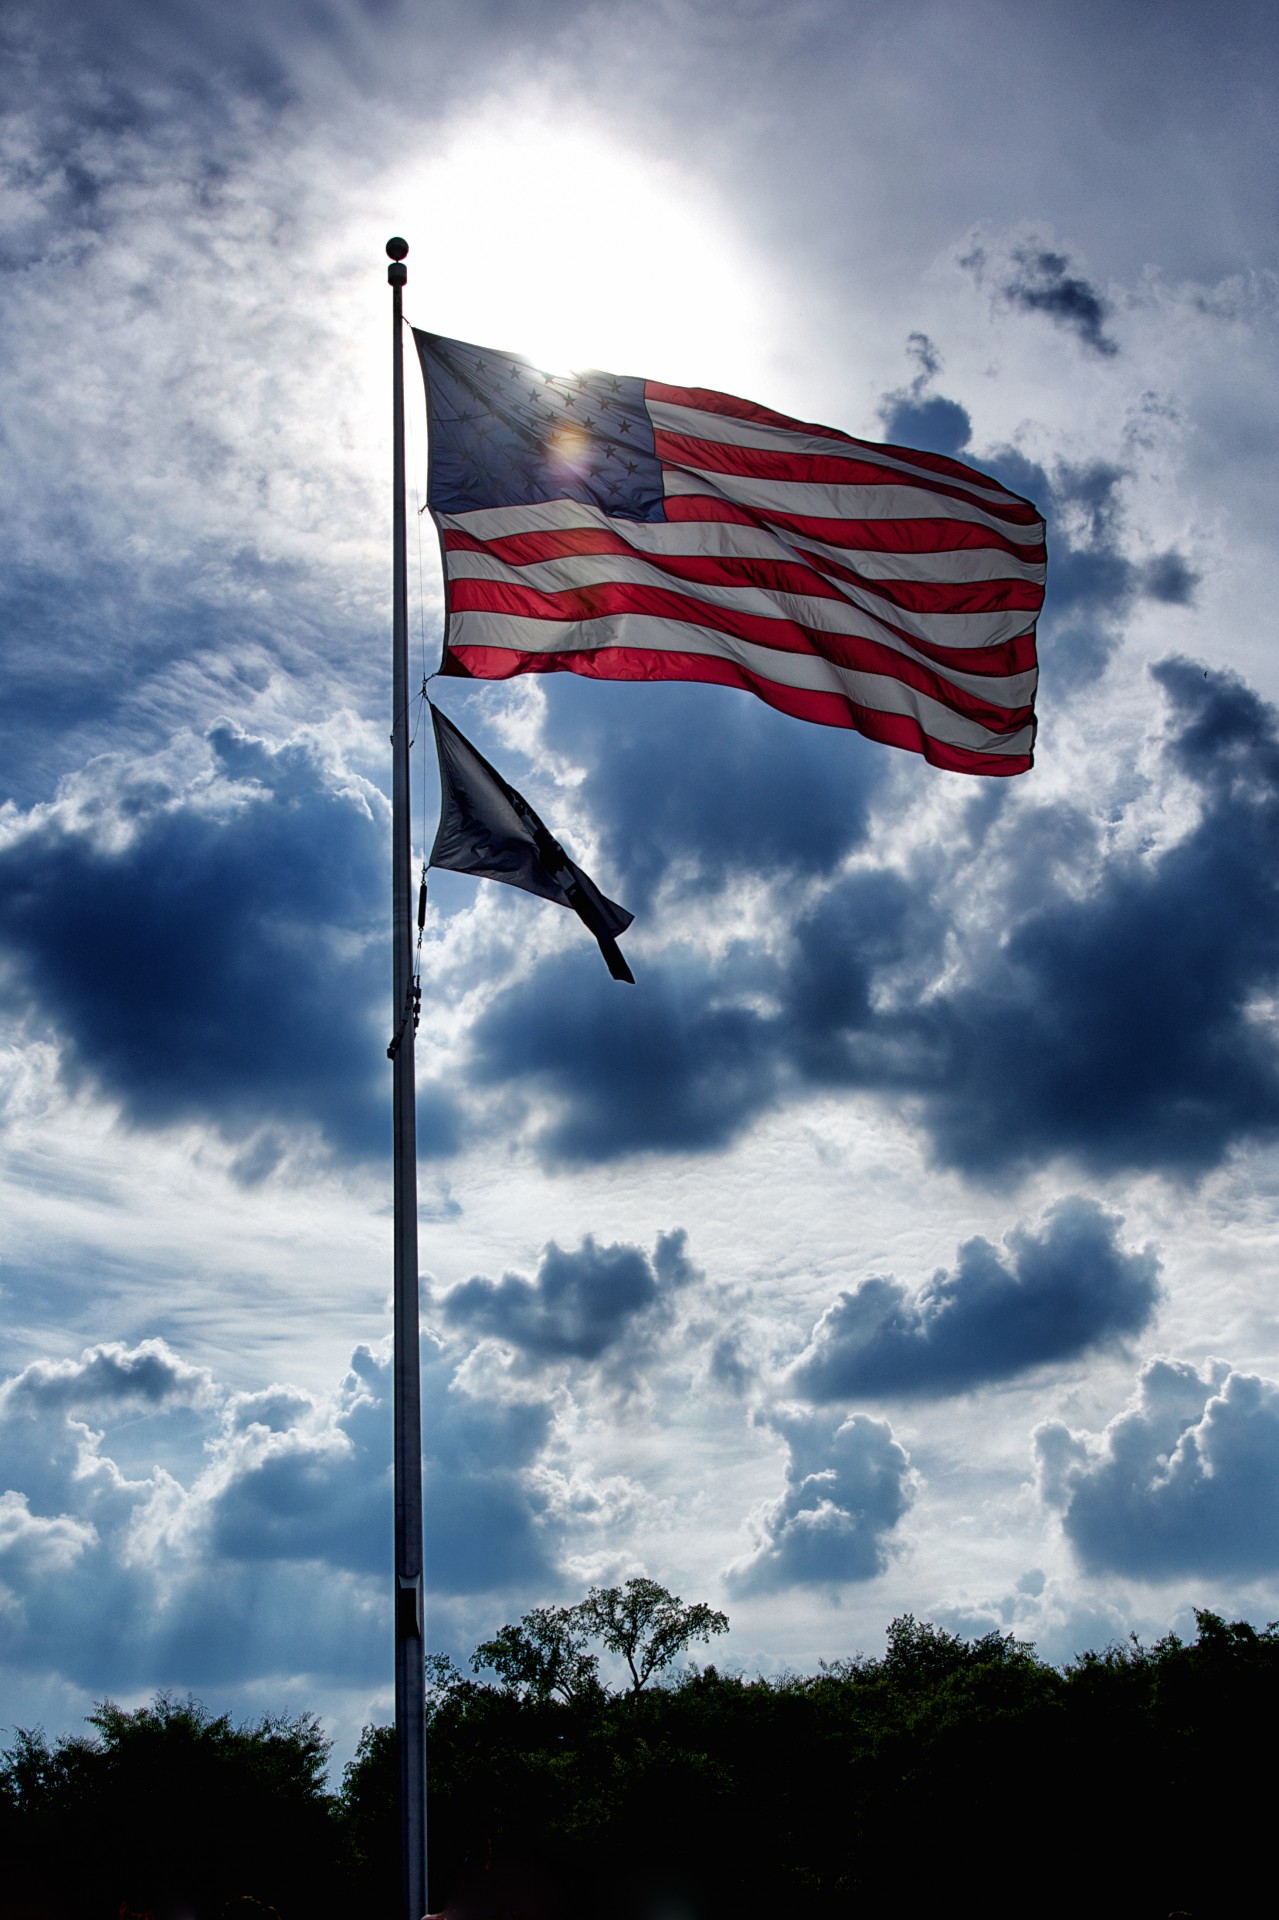 Sun light shines between clouds illuminating an American flag in Washington DC.